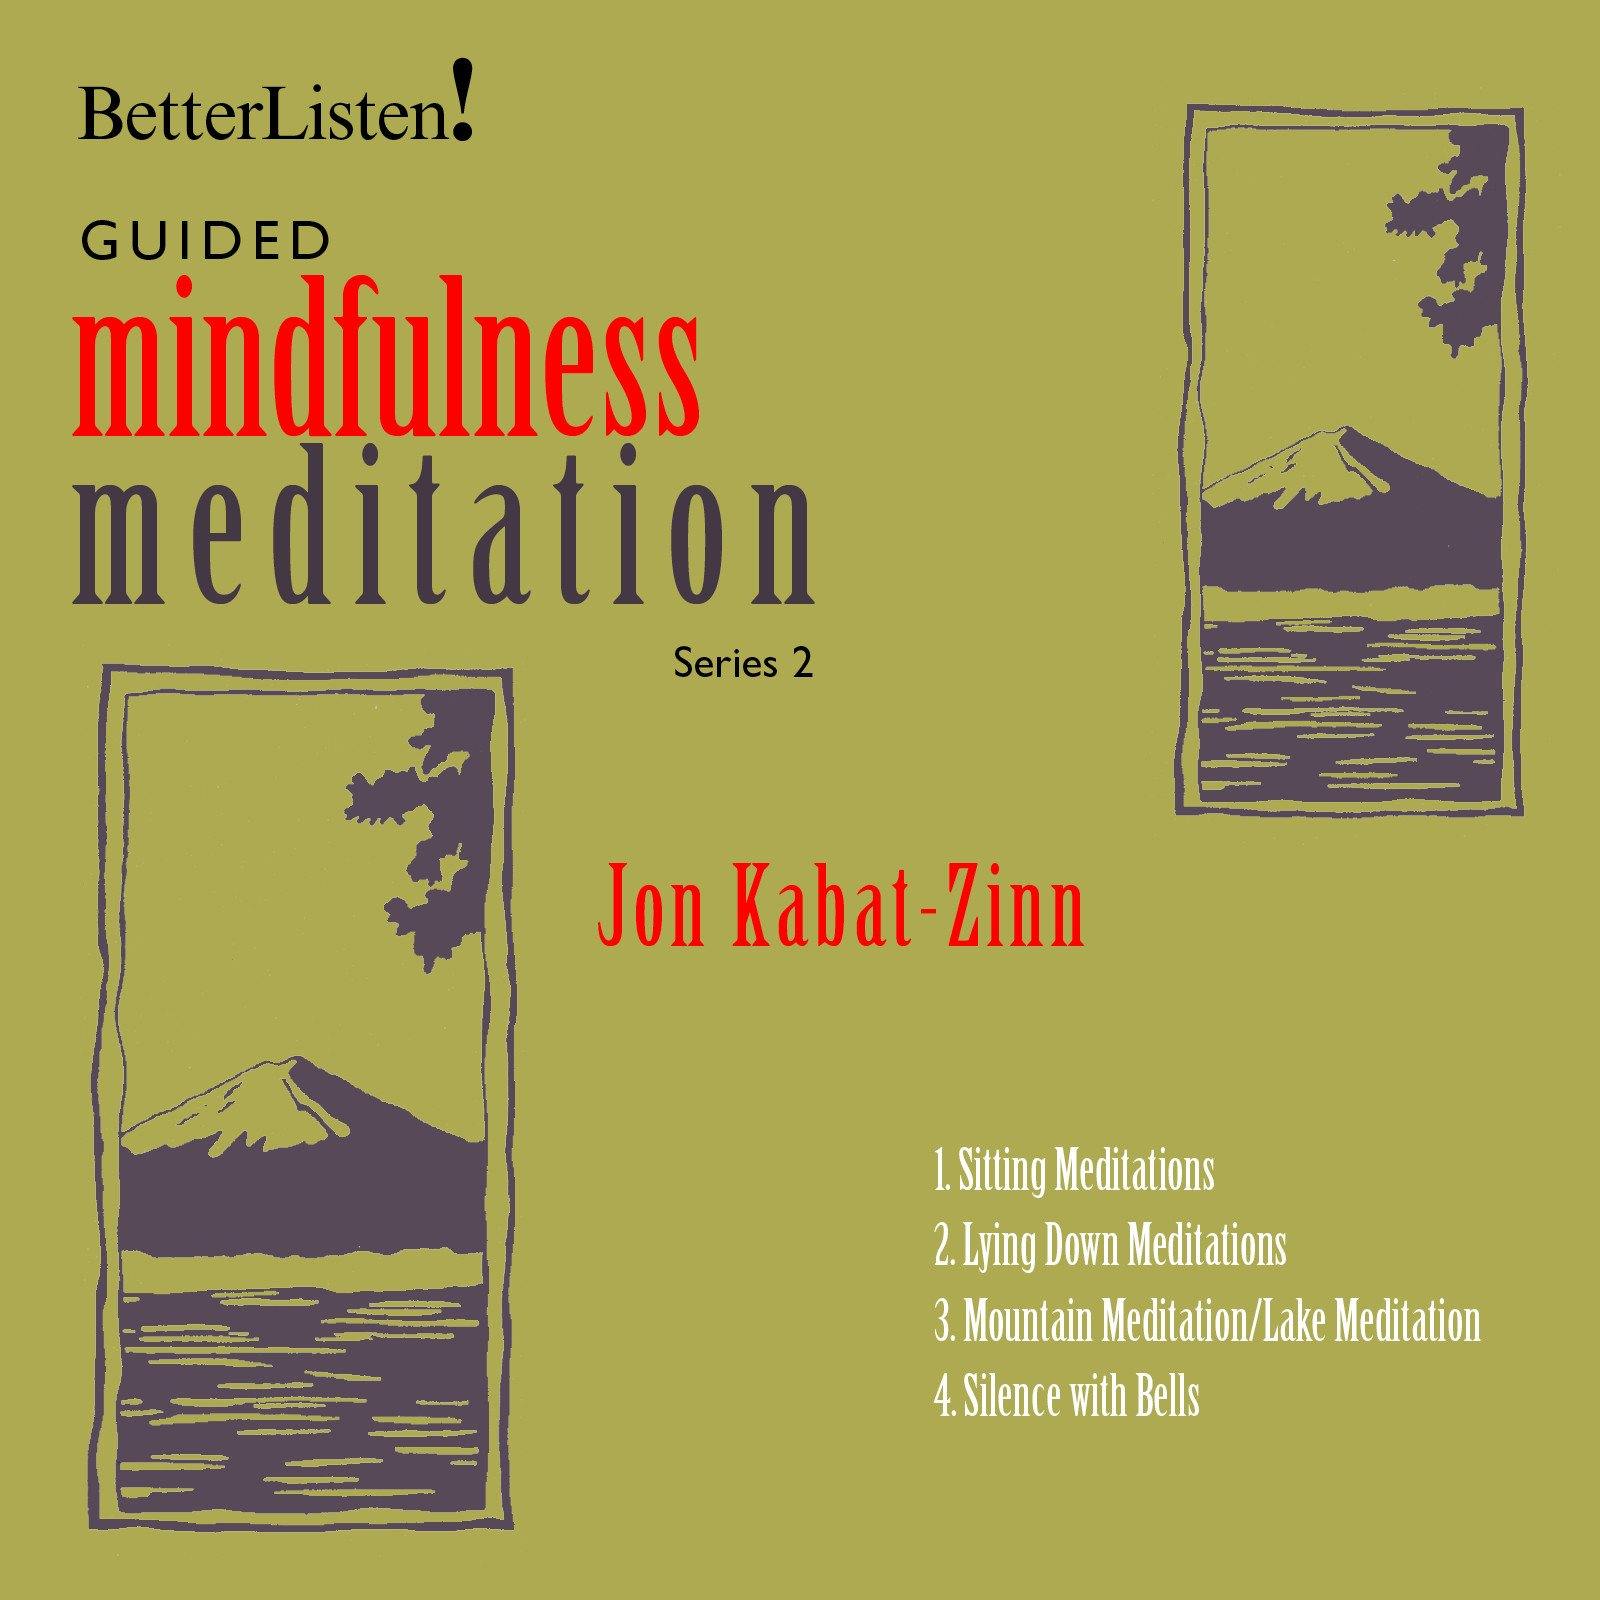 Guided Mindfulness Practices with Jon Kabat-Zinn- Series 2 Digital Download Audio Program Jon Kabat-Zinn - BetterListen!